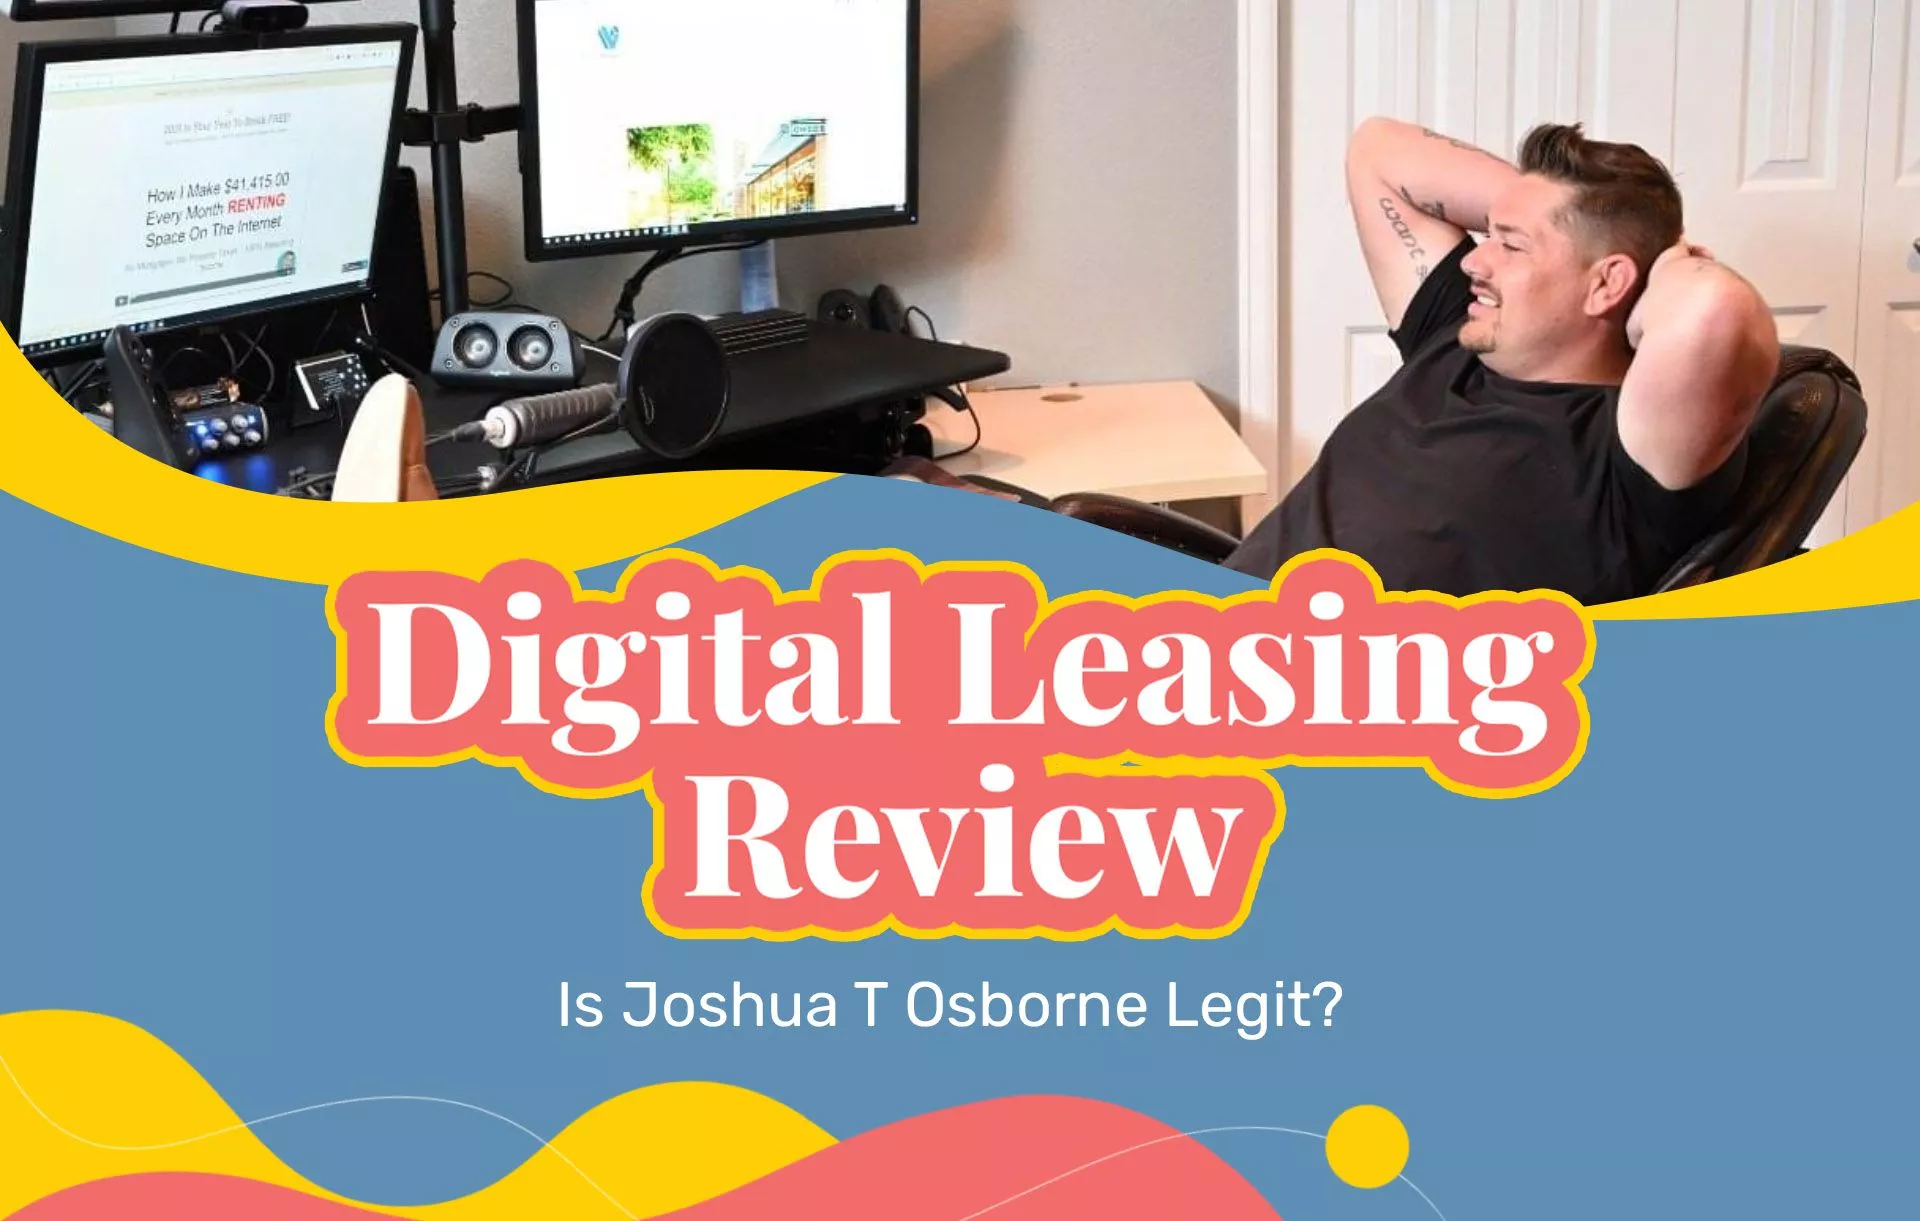 Digital Leasing Review: Is Joshua T Osborne Legit?